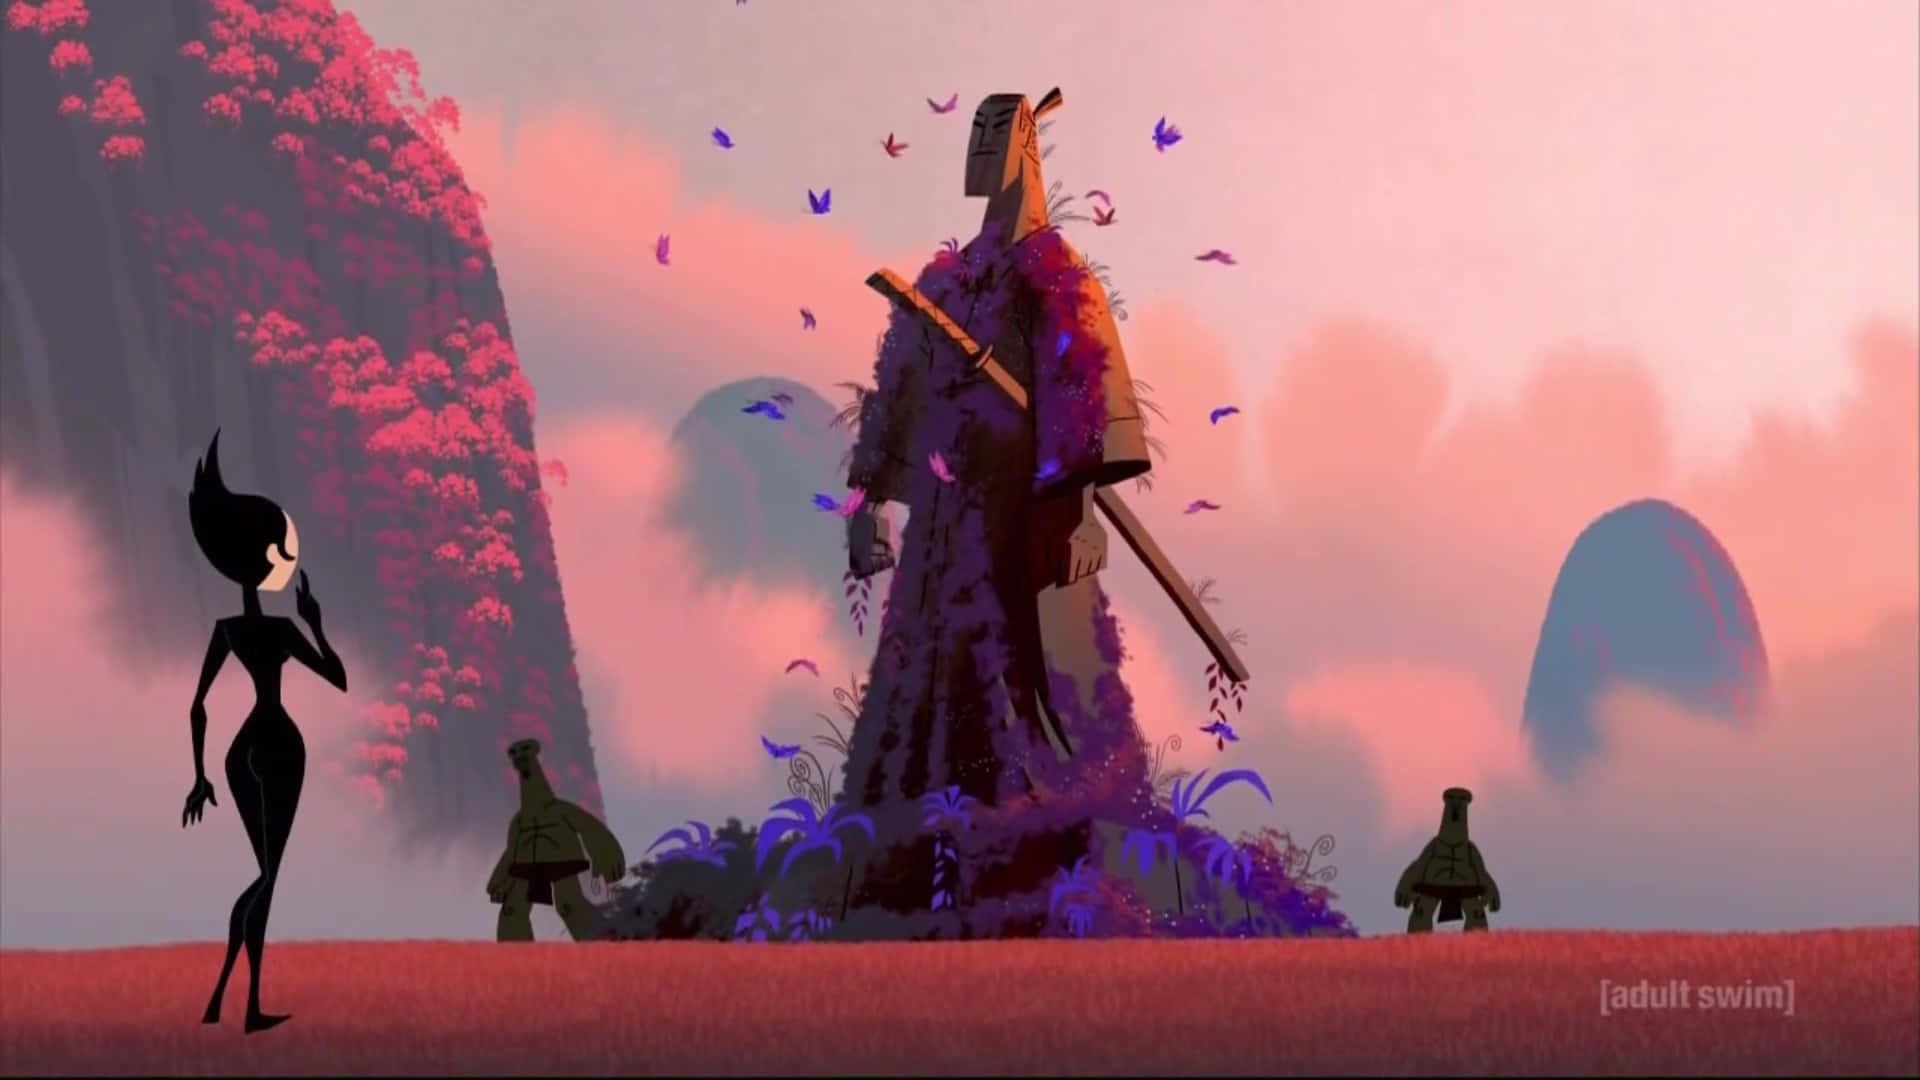 The valiant samurai Jack standing amidst a fiery landscape